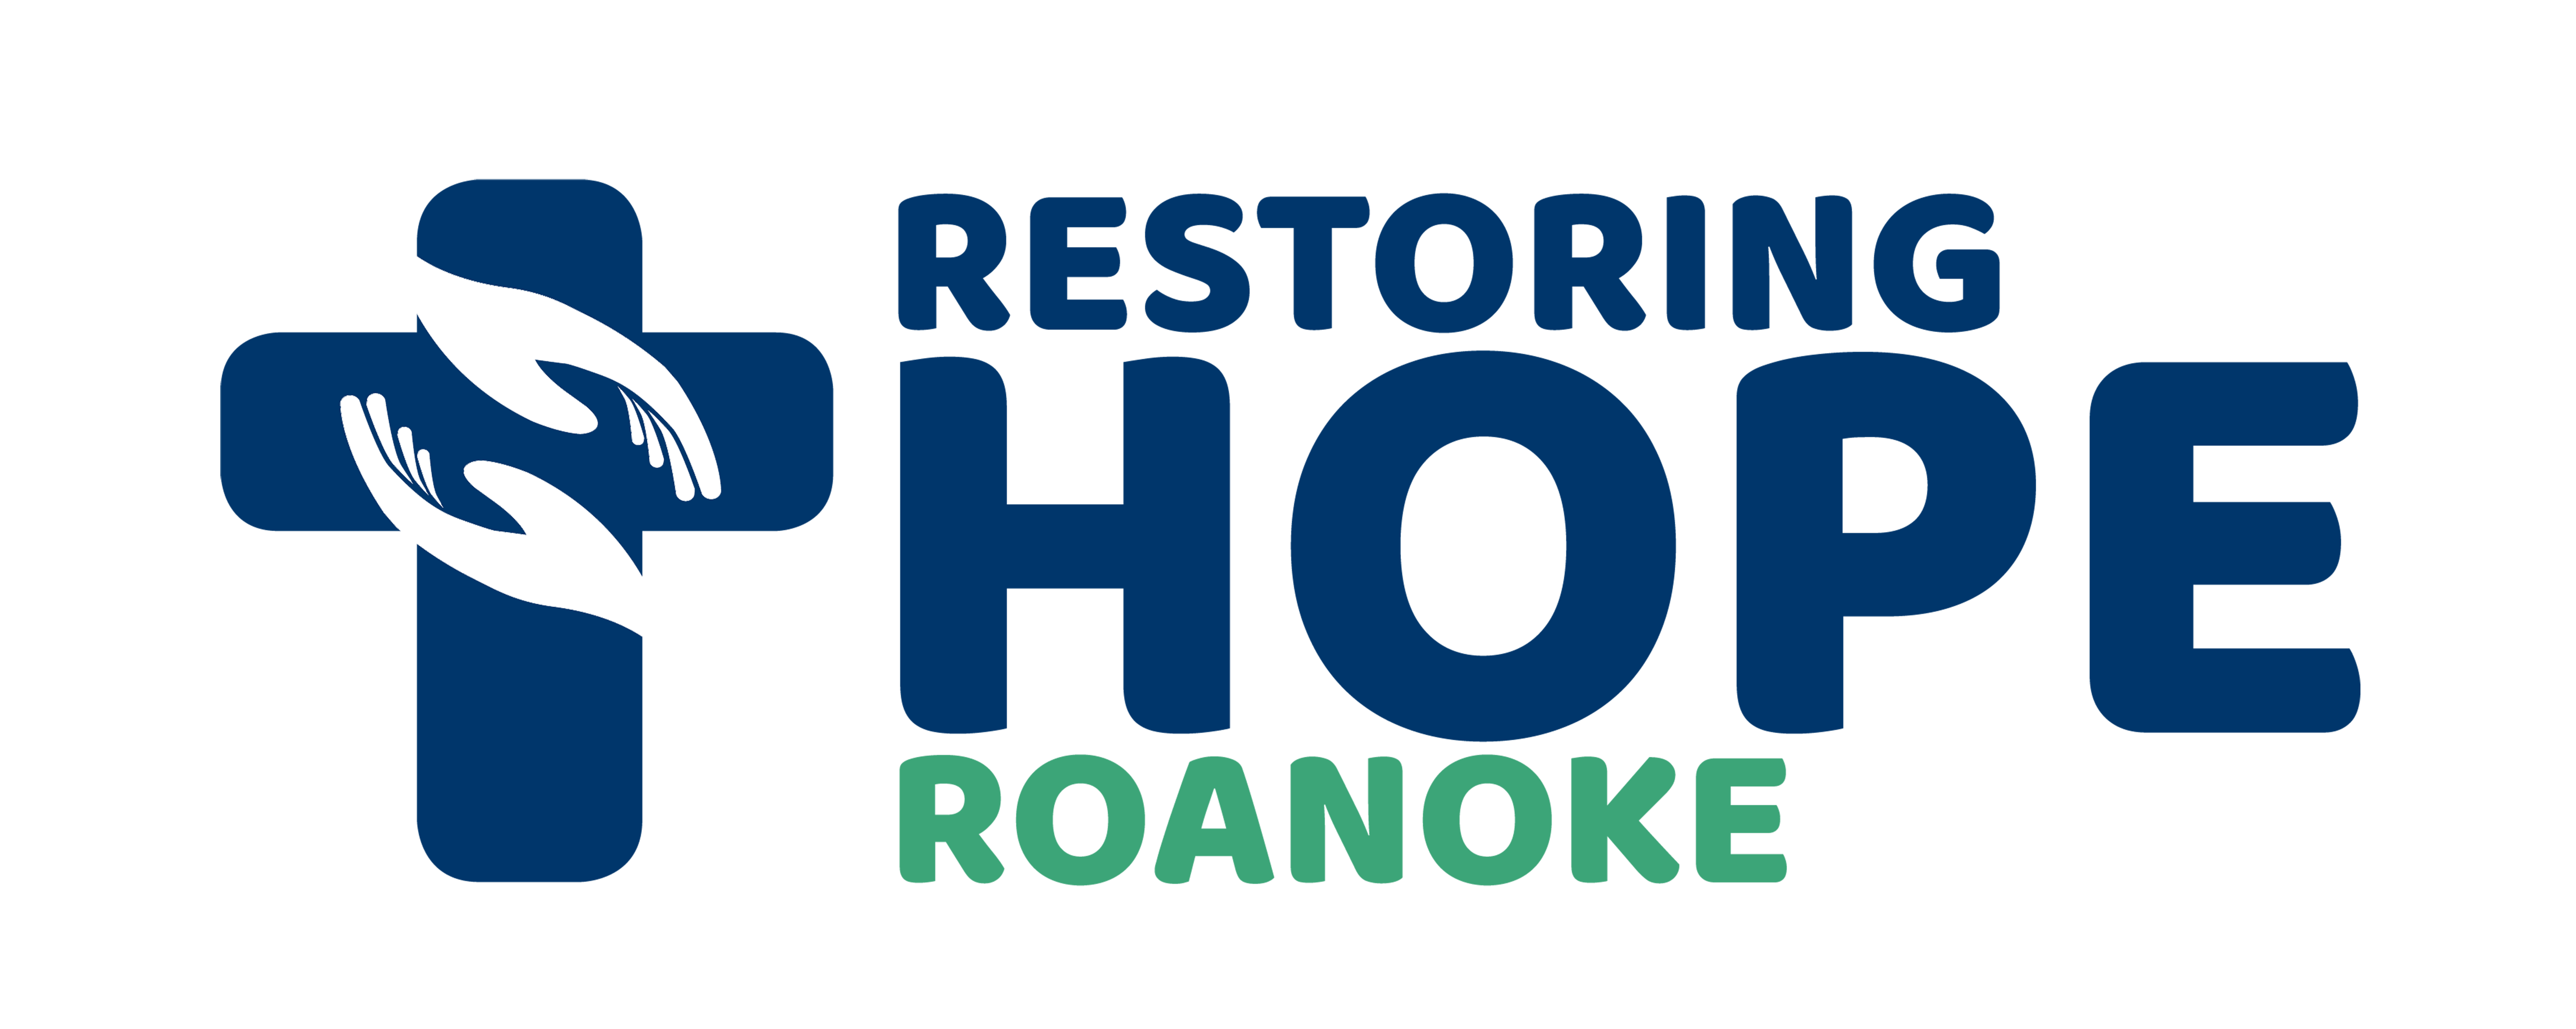 Restoring Hope Roanoke